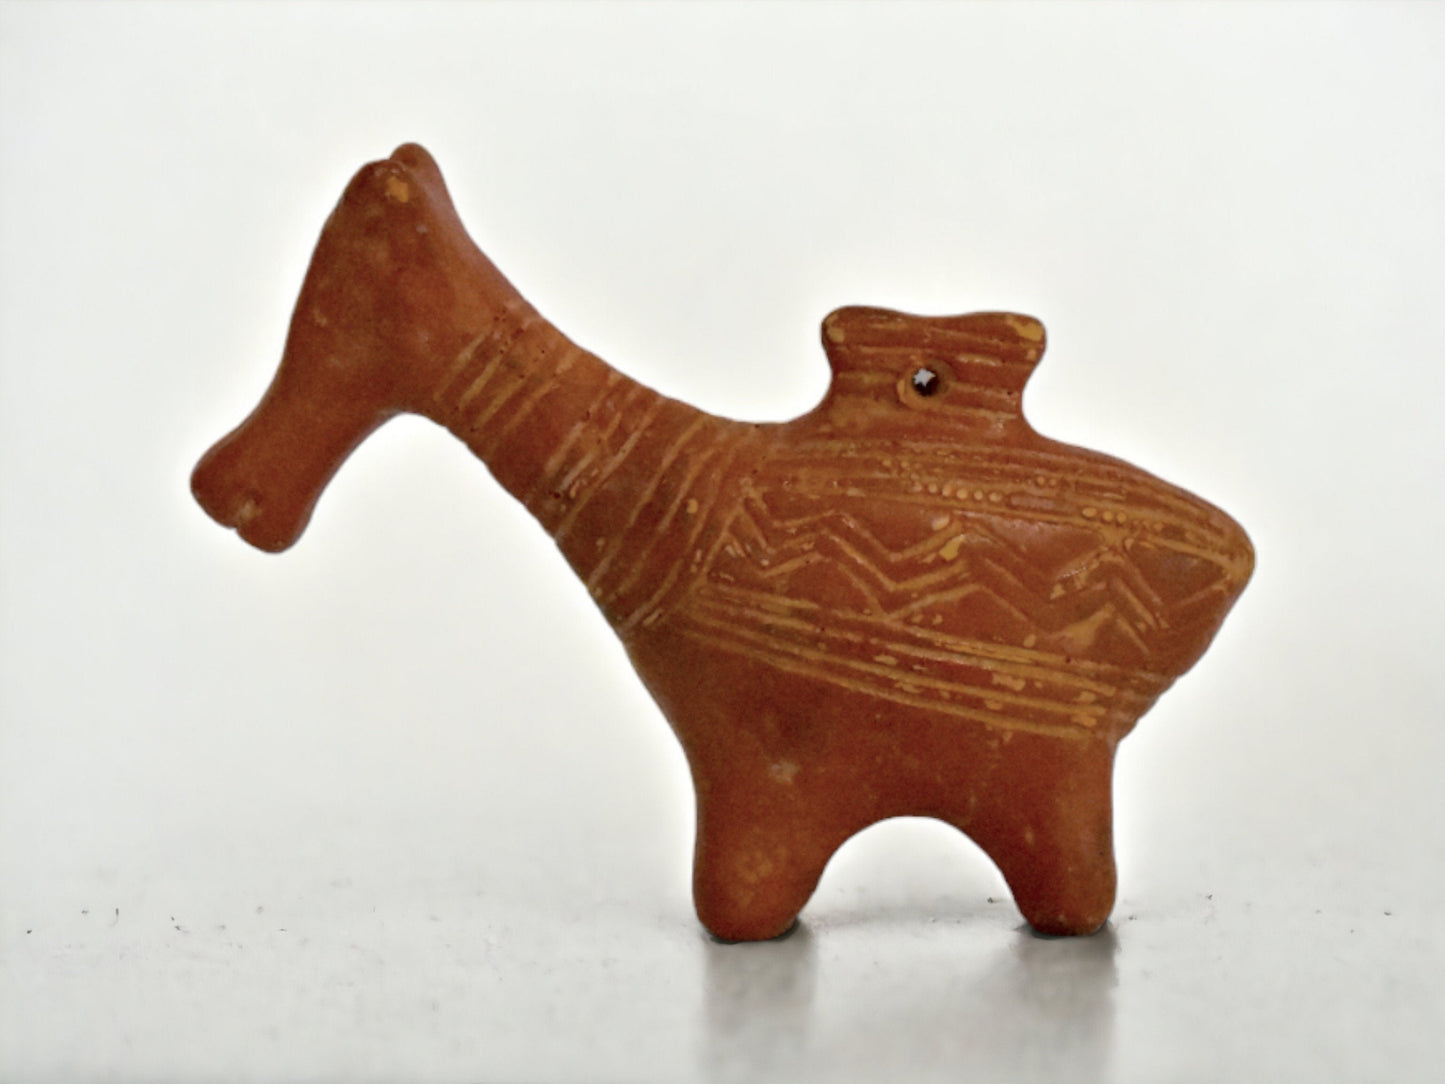 Donkey figurine Idol - Cyprus - 1600-1500 BC -  Nicosia Museum - Reproduction - Ceramic Artifact